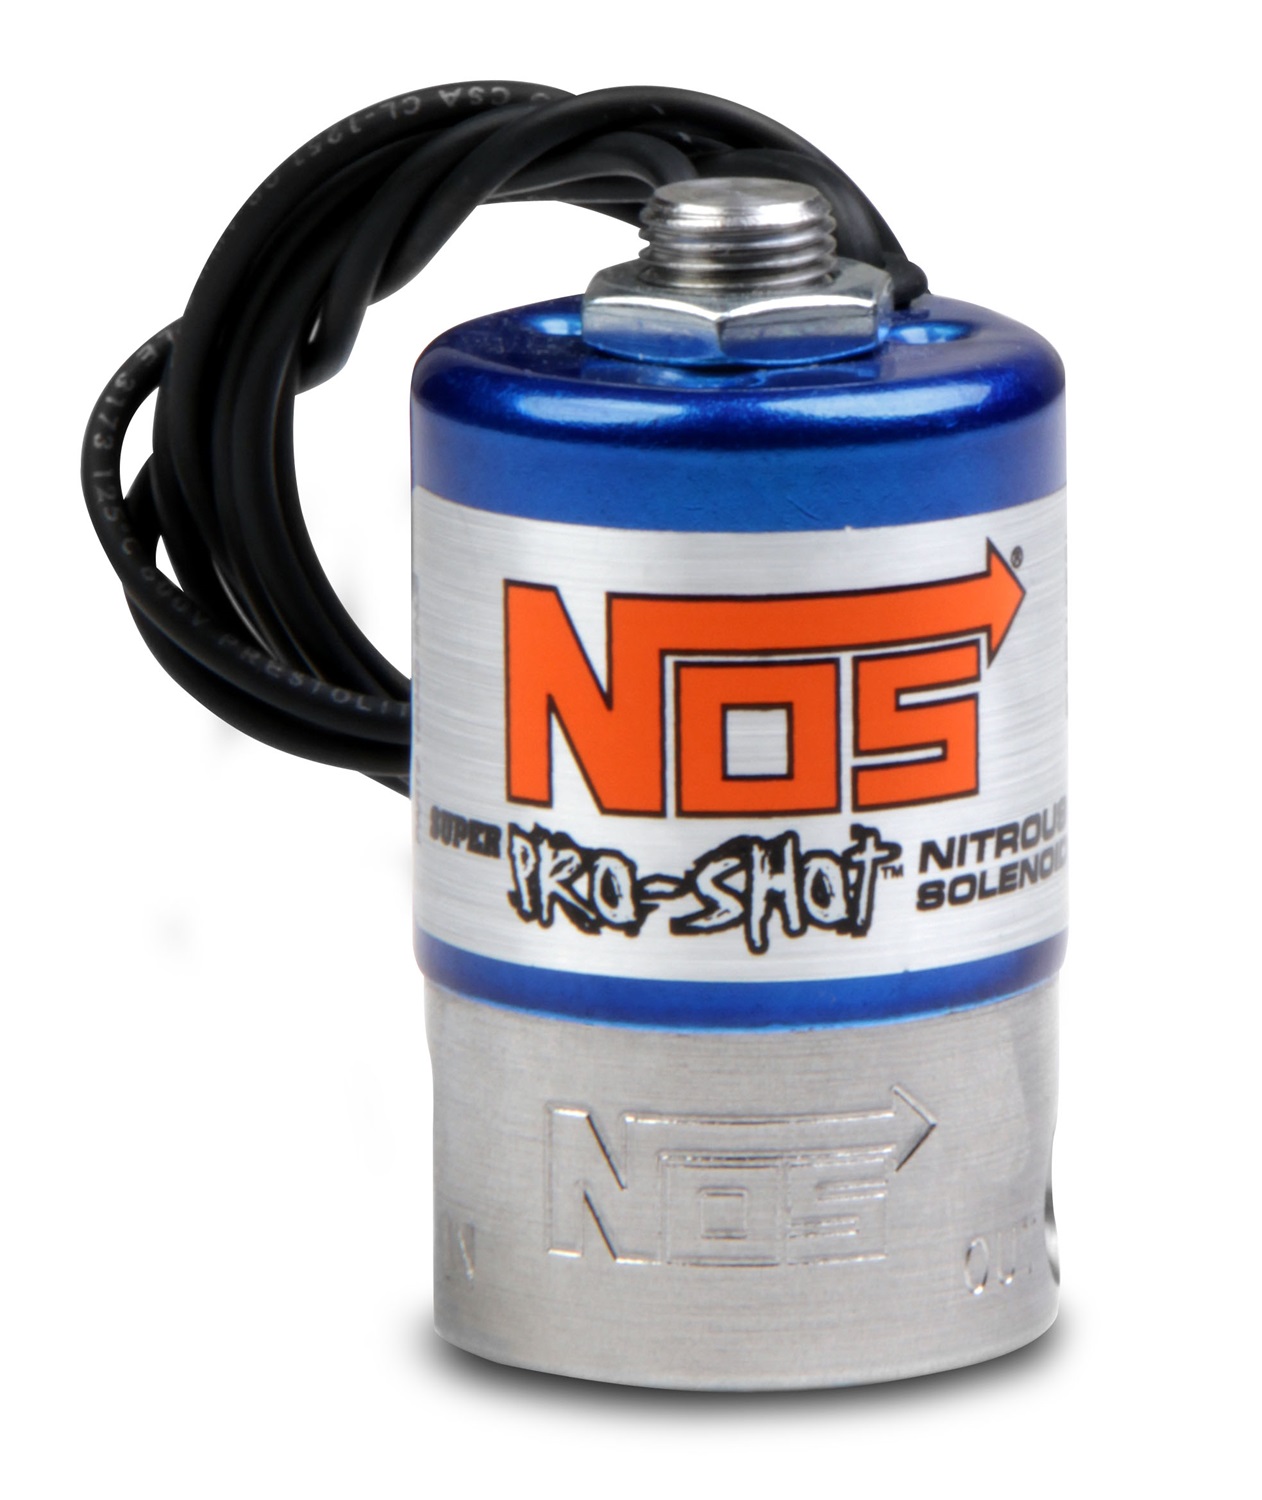 Nitrous Oxide Solenoid, NOS Solenoids and parts, SUPER PRO SHOT SOLENOID N2O